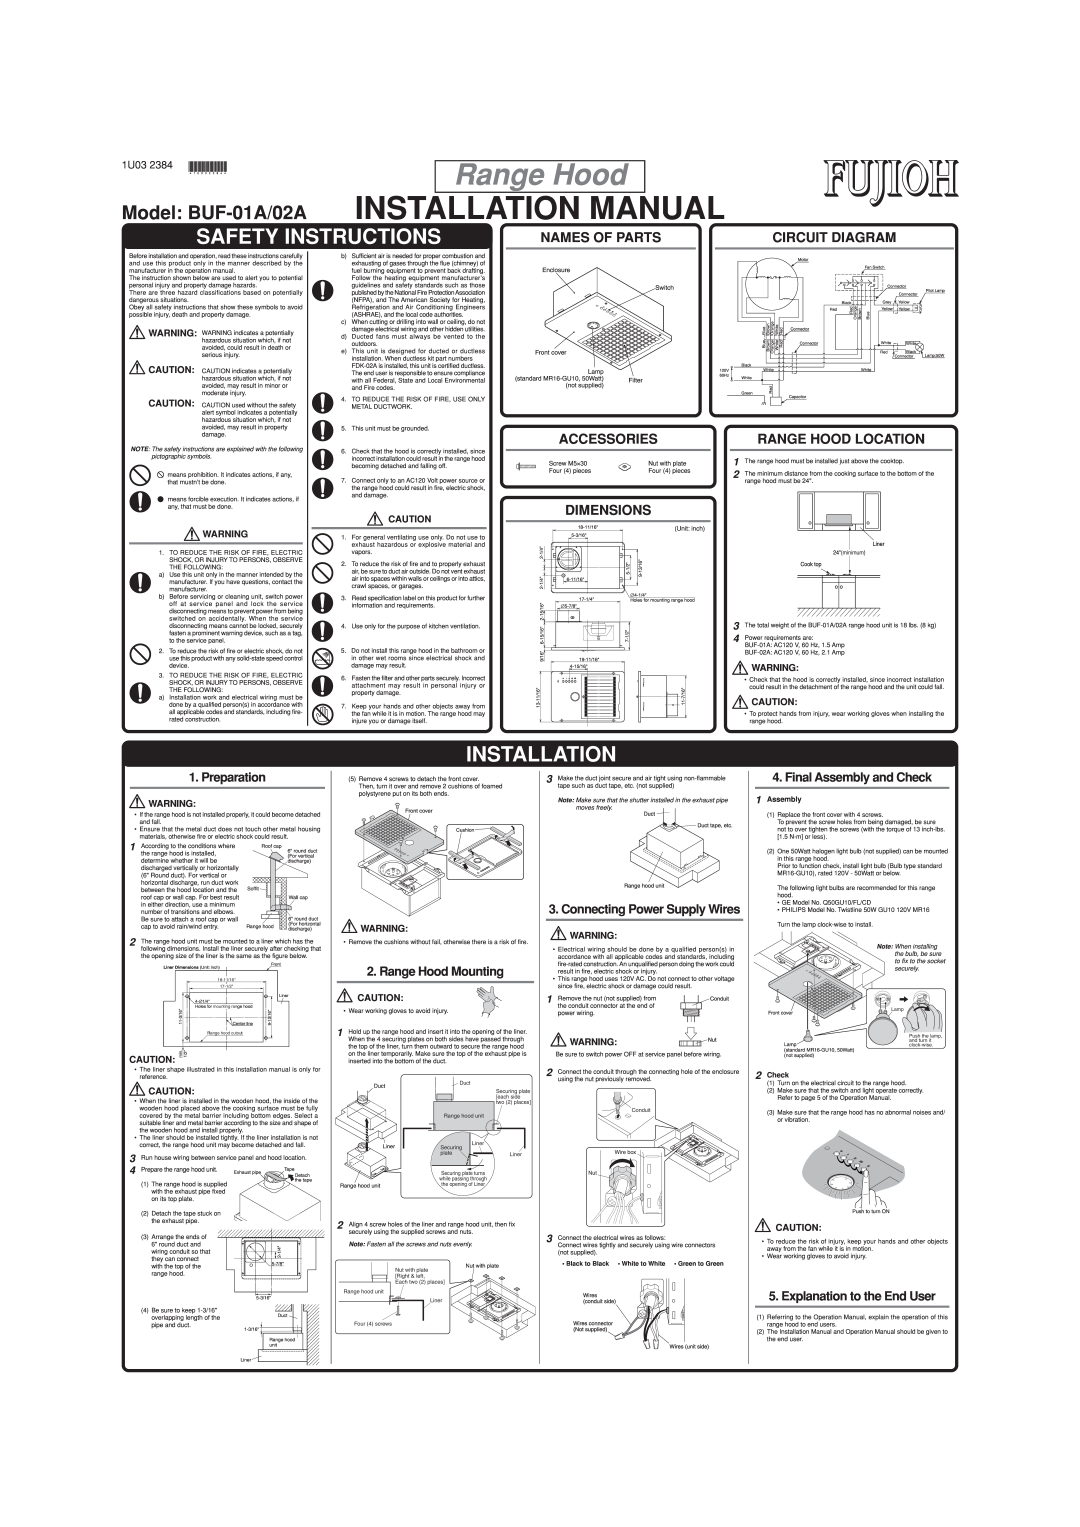 Fujioh installation manual Installation Manual, Range Hood, Safety Instructions, Model BUF-01A/02A, Names Of Parts 